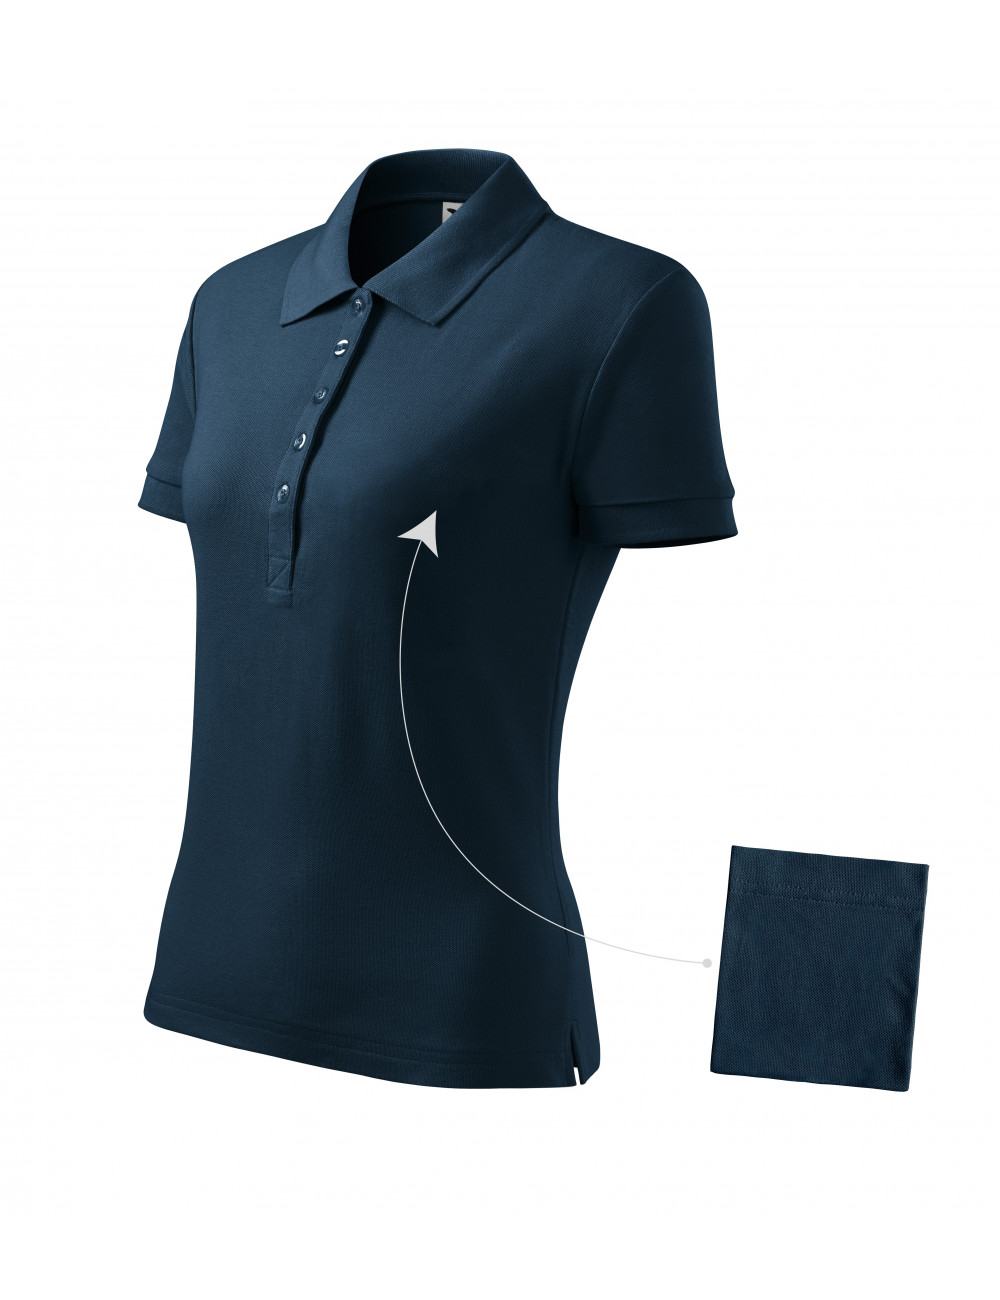 Ladies polo shirt cotton 213 navy blue Adler Malfini